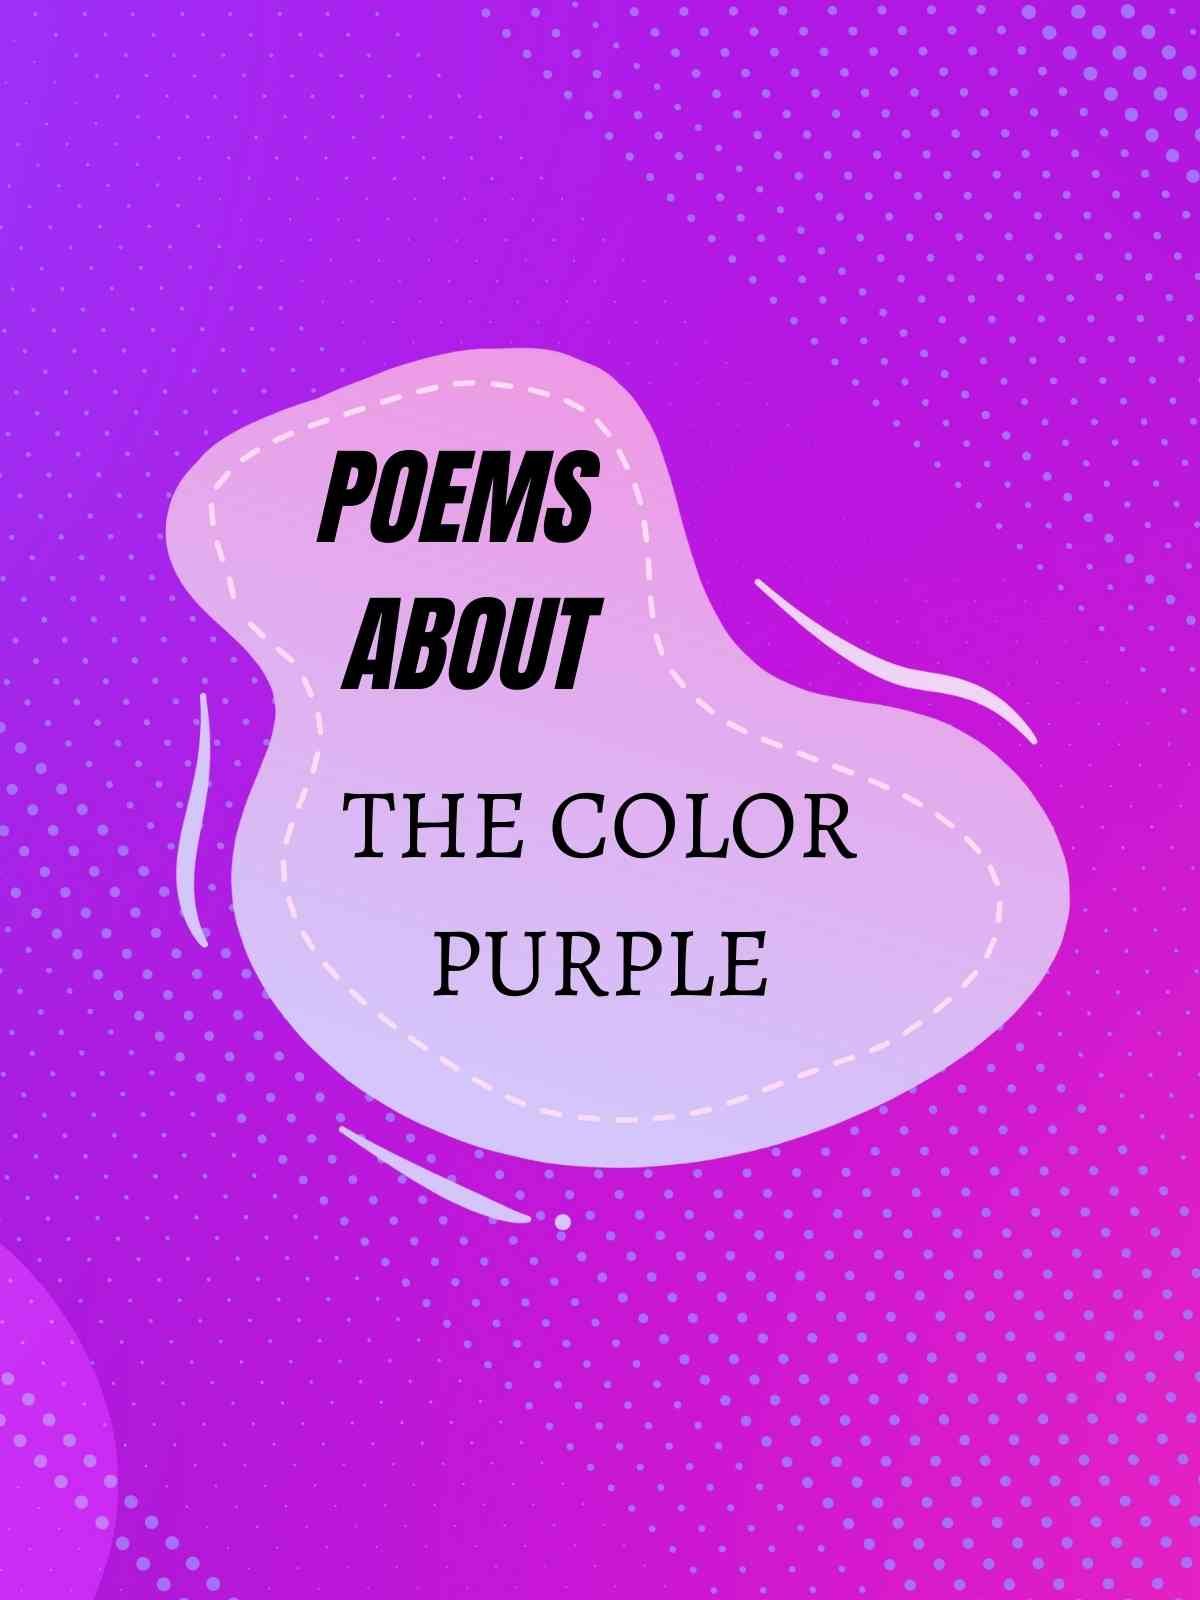 Poems about the color purple